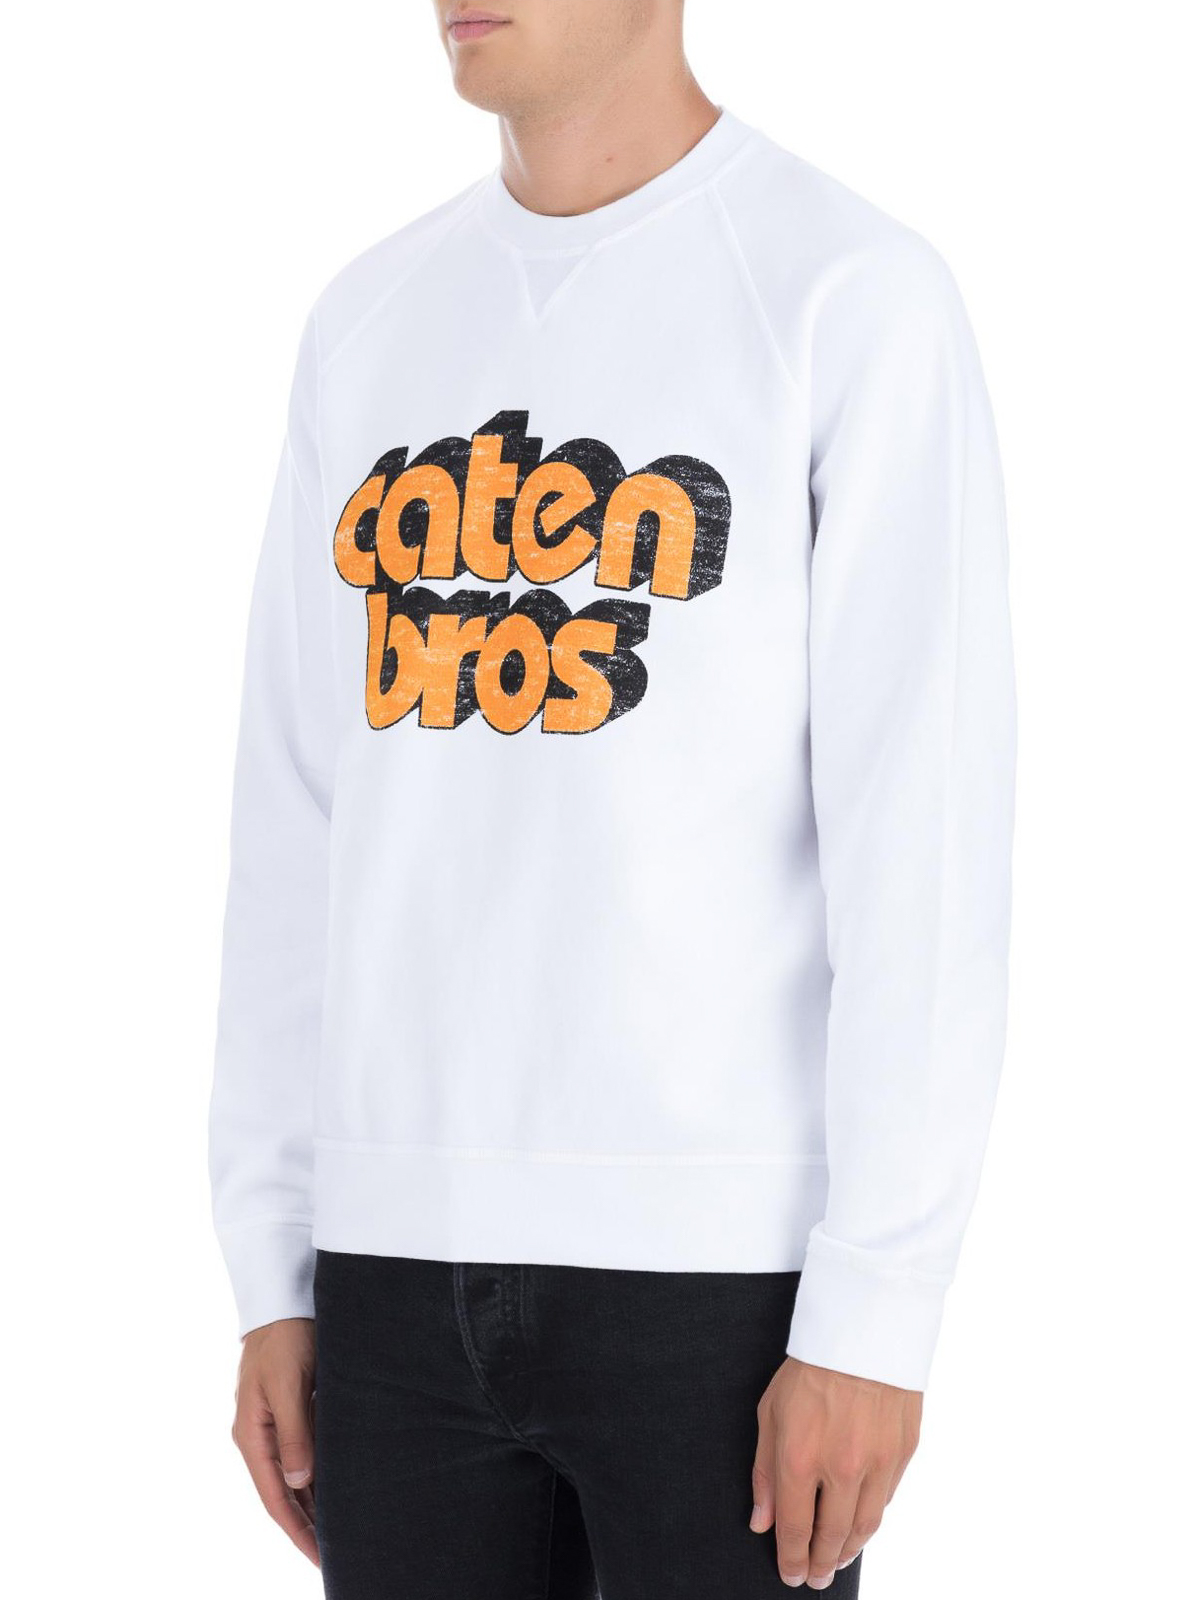 dsquared caten brothers sweatshirt